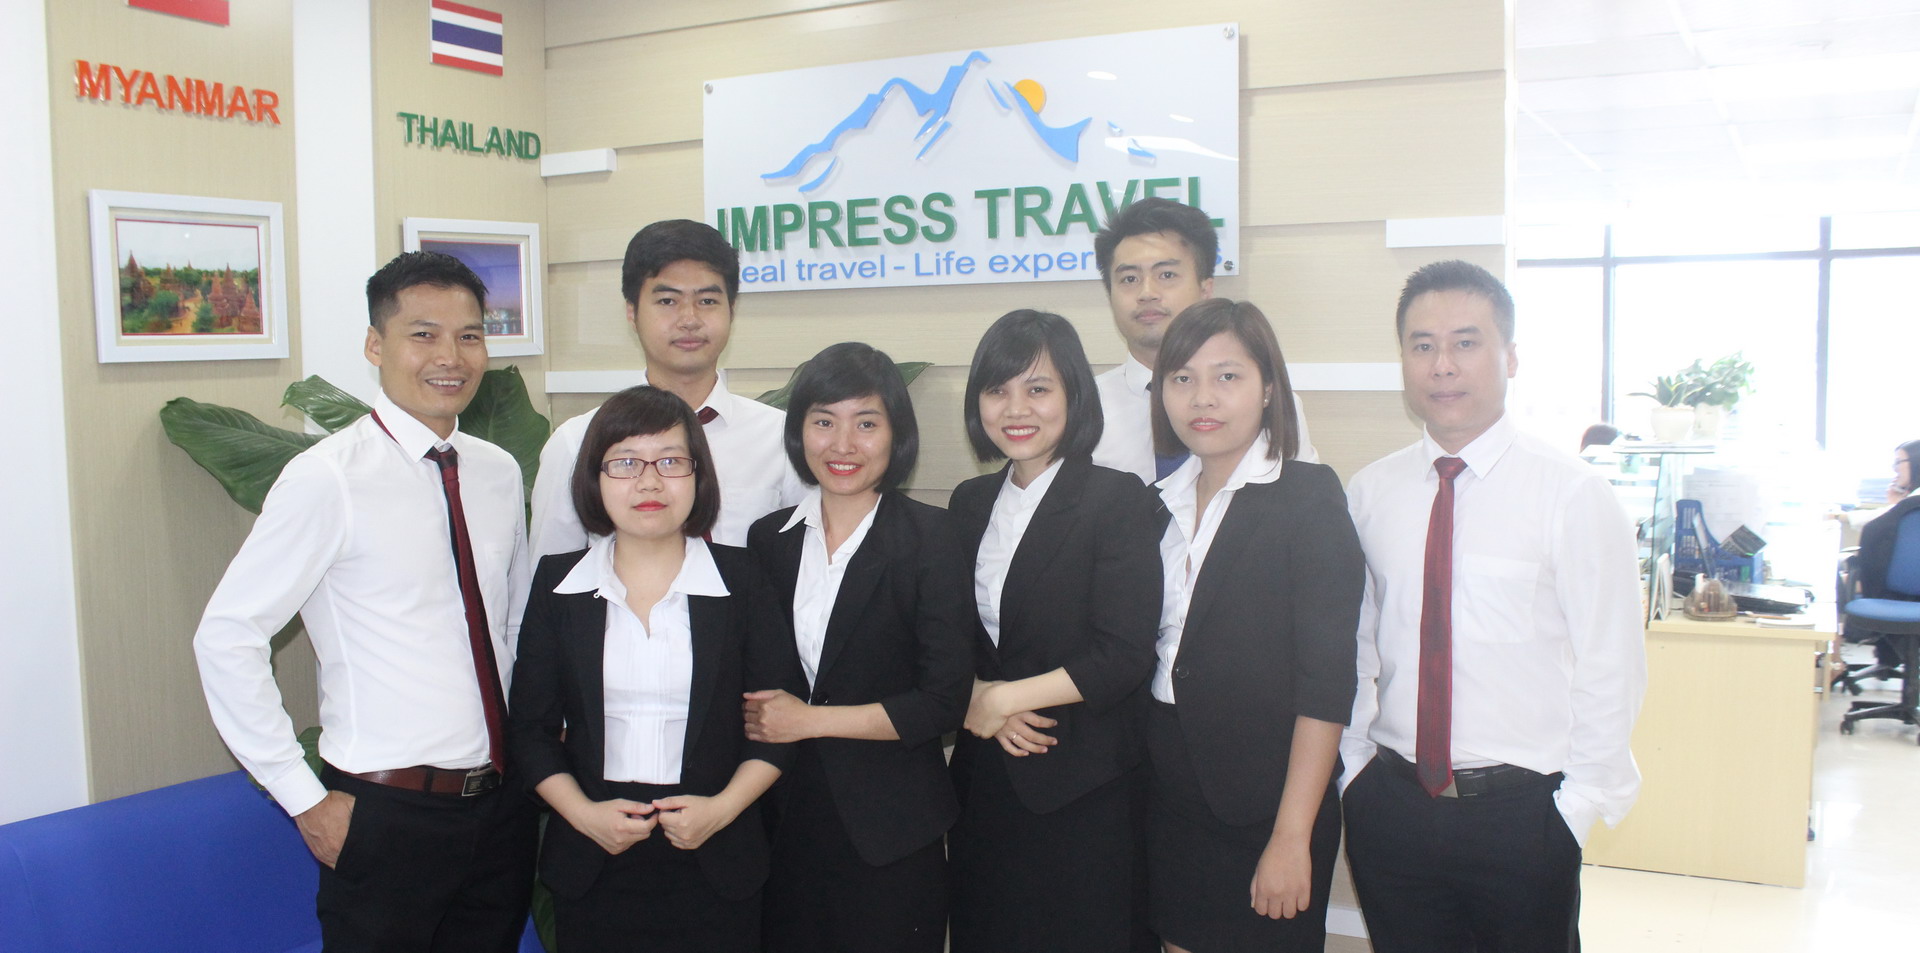 Impress Travel Head Office Team